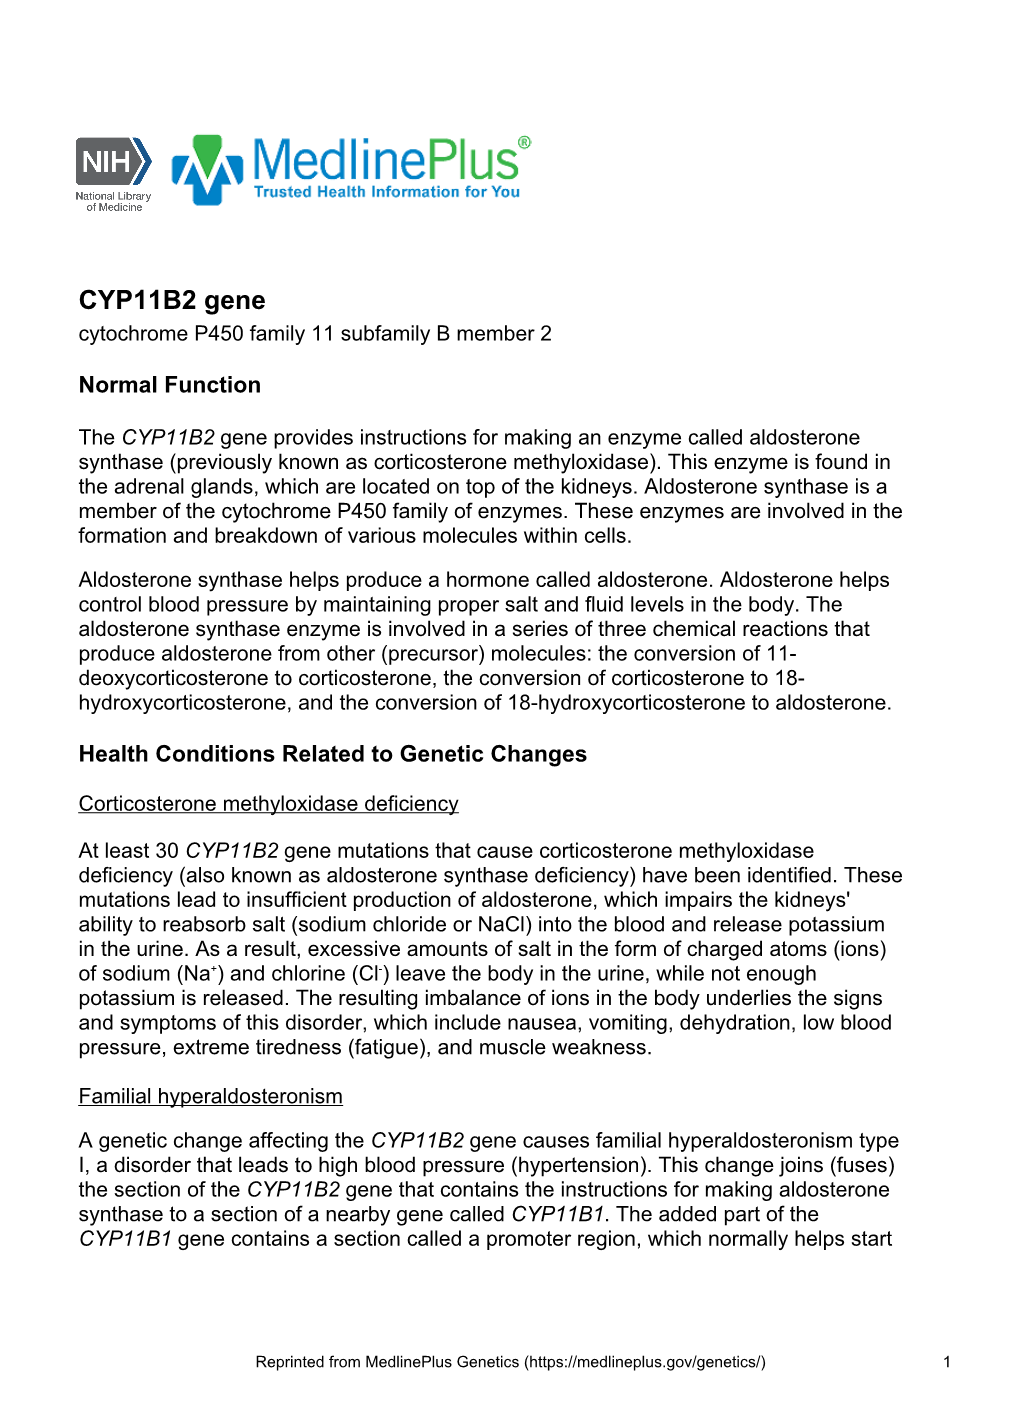 CYP11B2 Gene Cytochrome P450 Family 11 Subfamily B Member 2